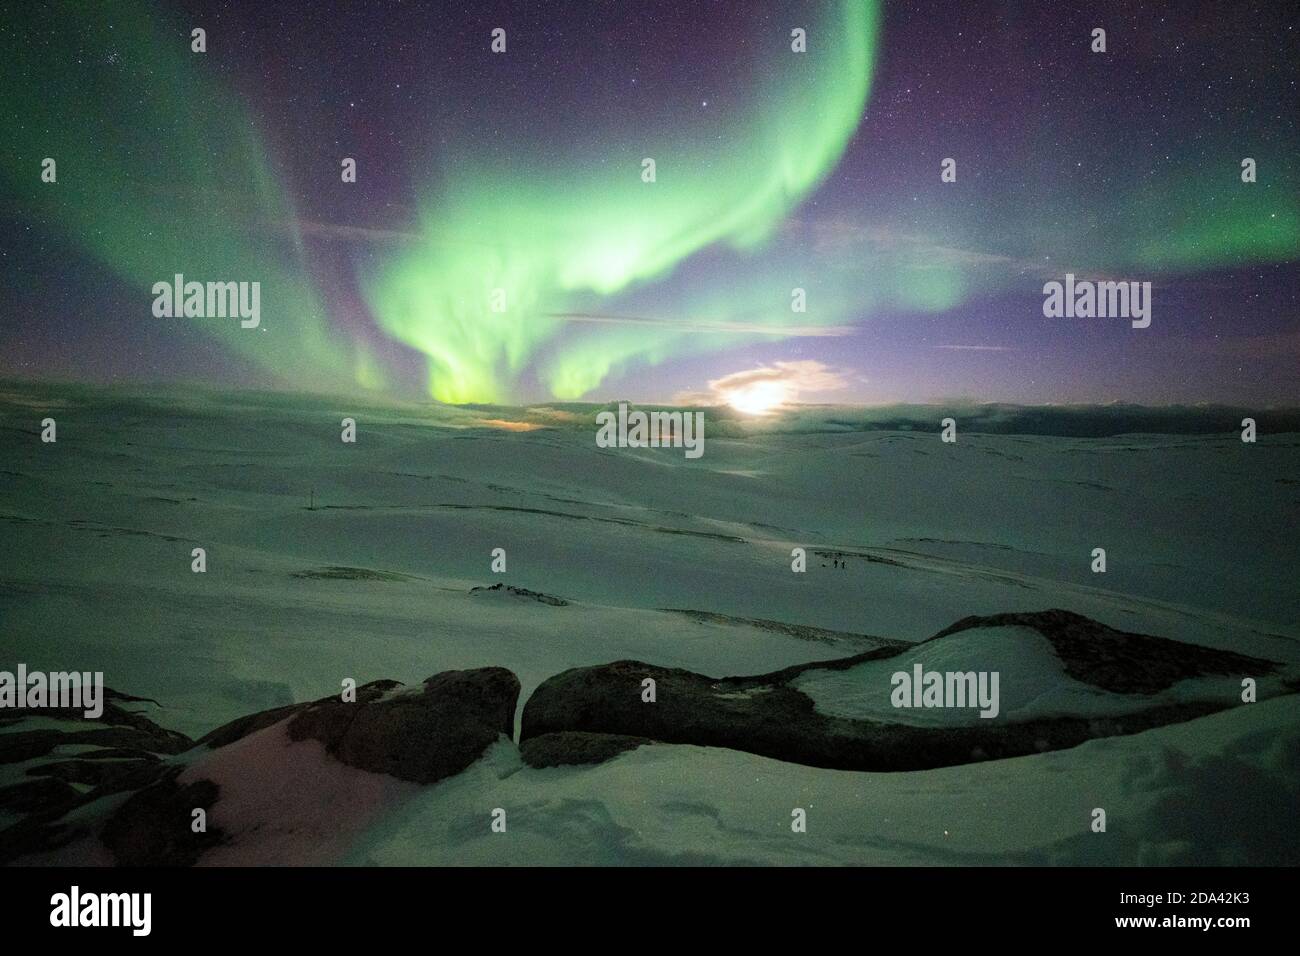 Schneebedeckte Landschaft vom Mond am Sternenhimmel während Nordlichter, Skarsvag, Nordkapp, Troms Og Finnmark, Norwegen beleuchtet Stockfoto